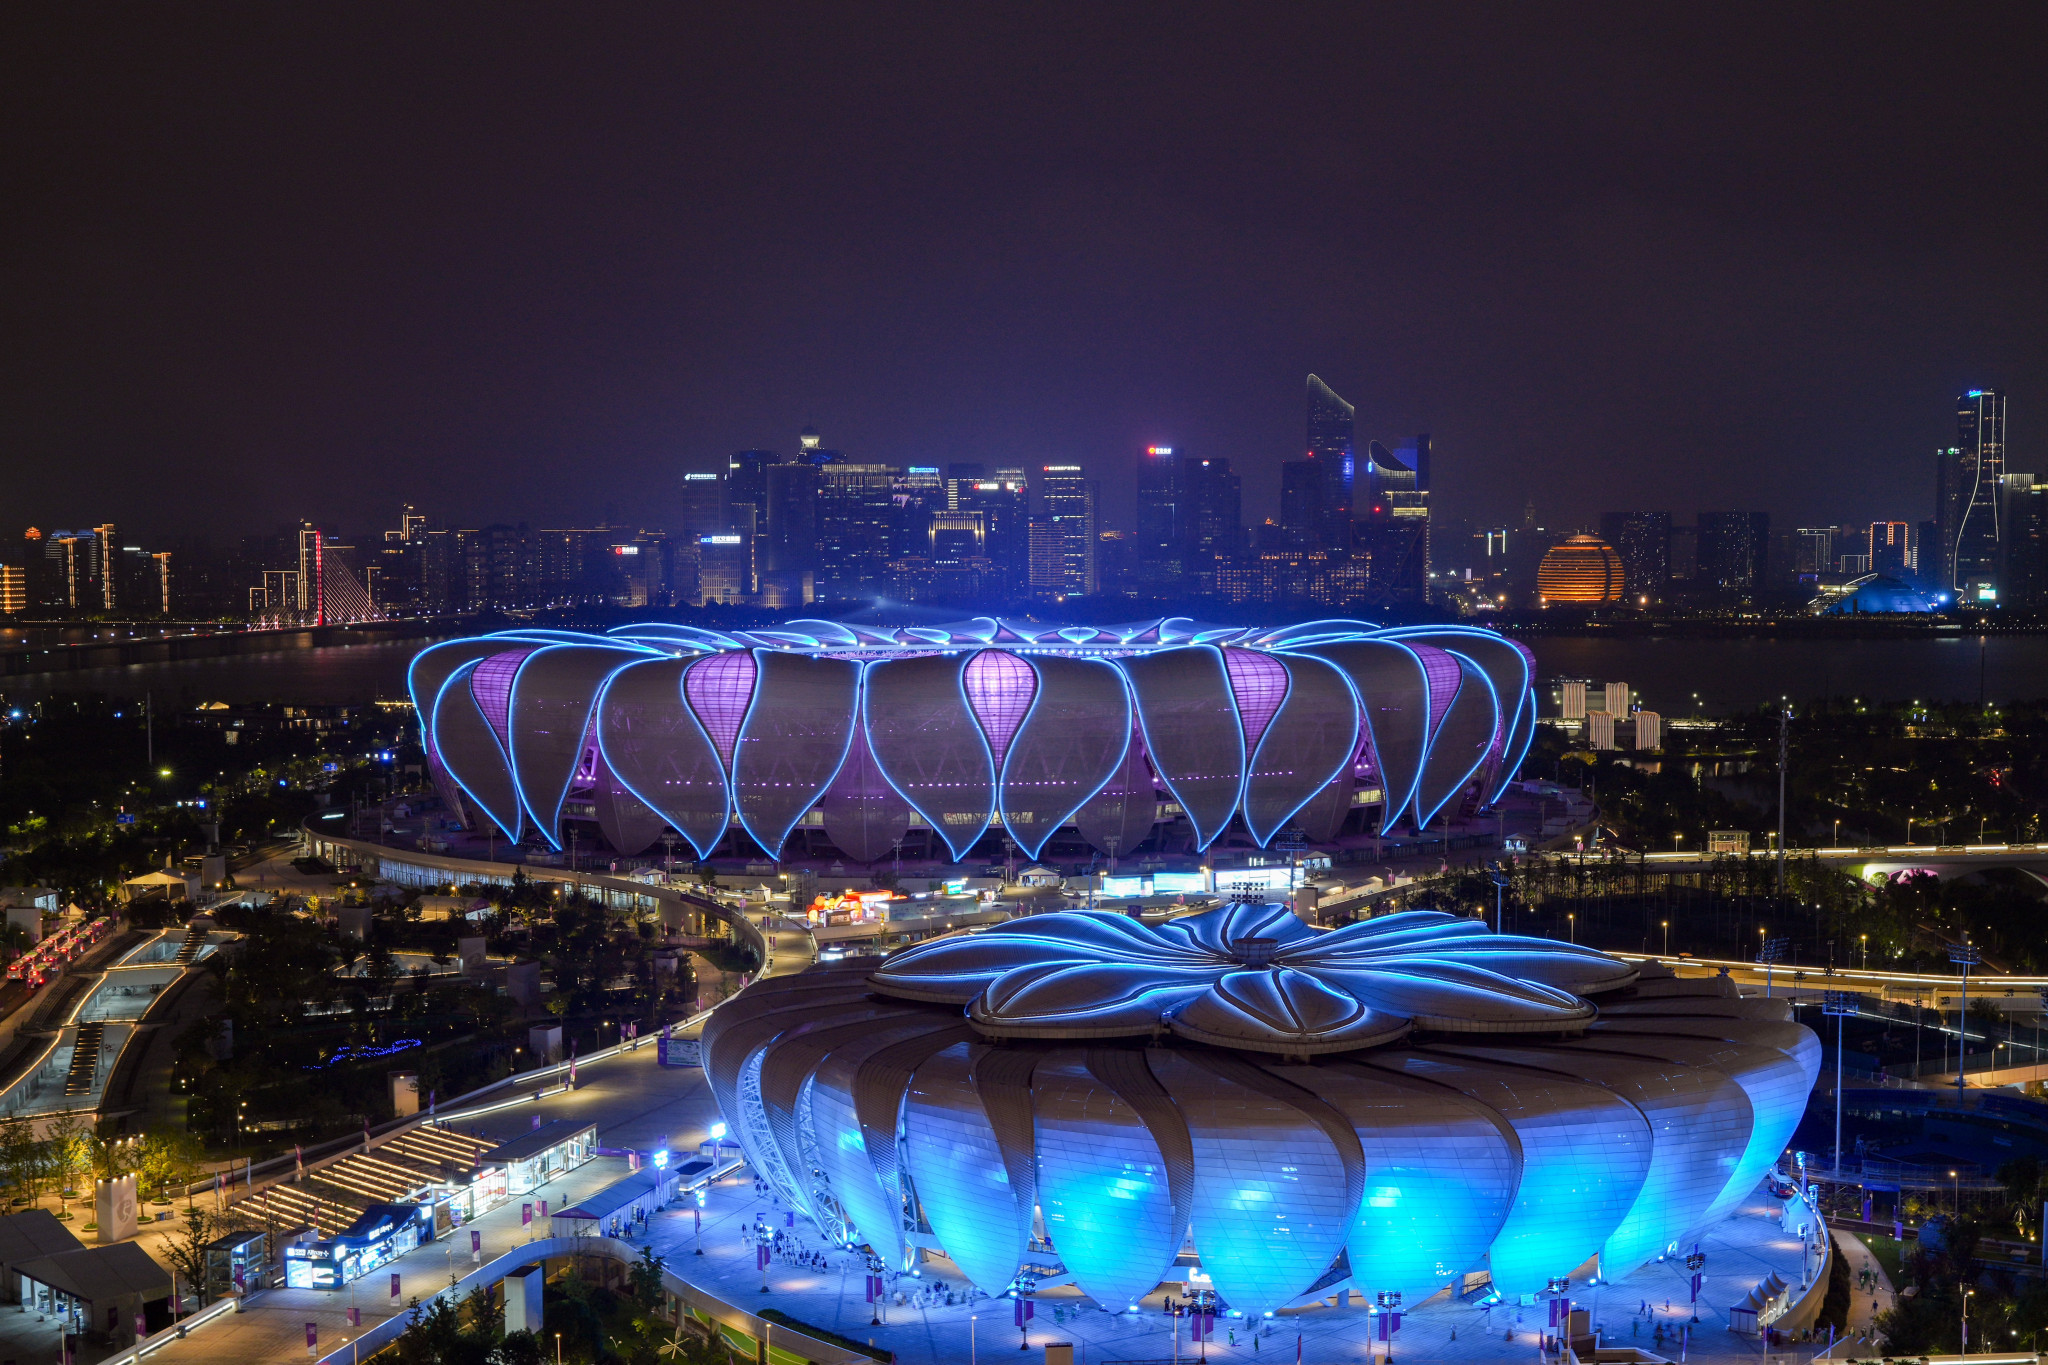 Hangzhou 2022 moved Asian Games into "digital world", claim organisers